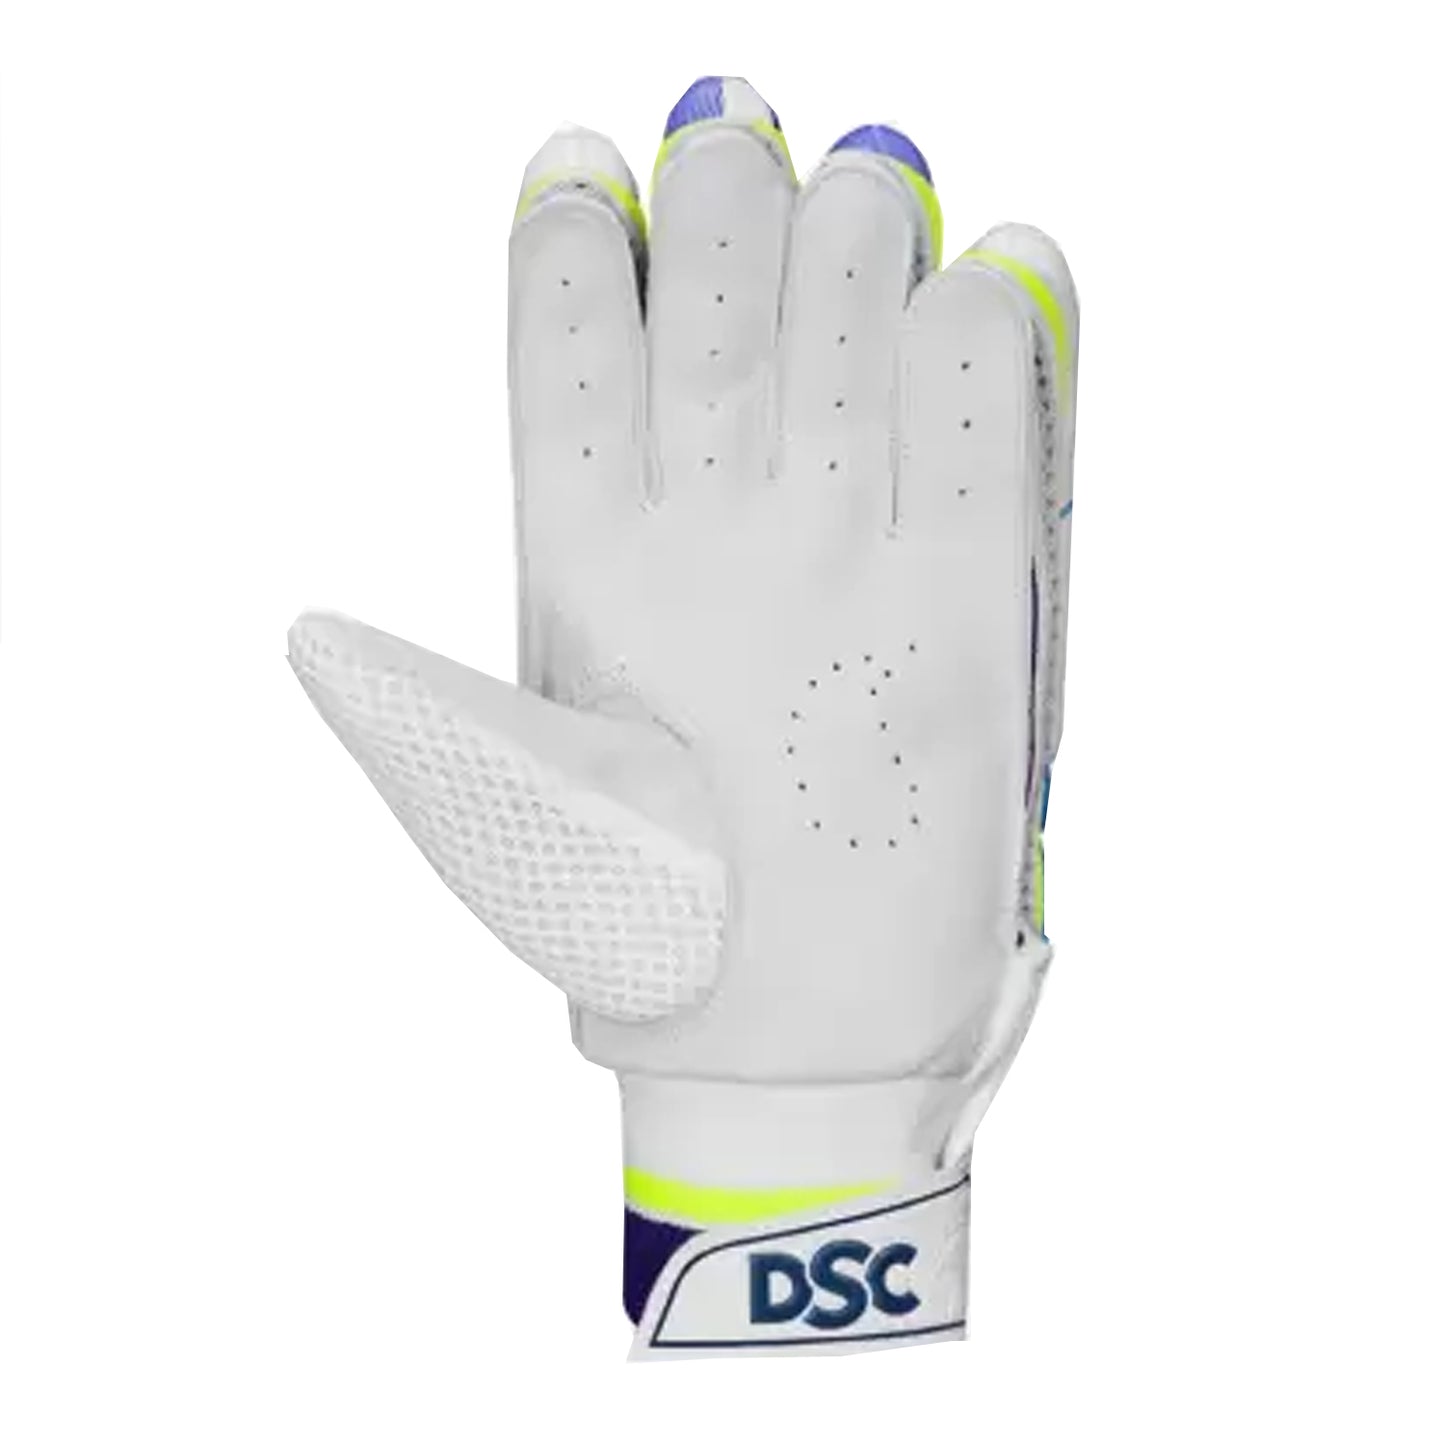 DSC Condor Motion Cricket Batting Gloves - Left Hand - Best Price online Prokicksports.com